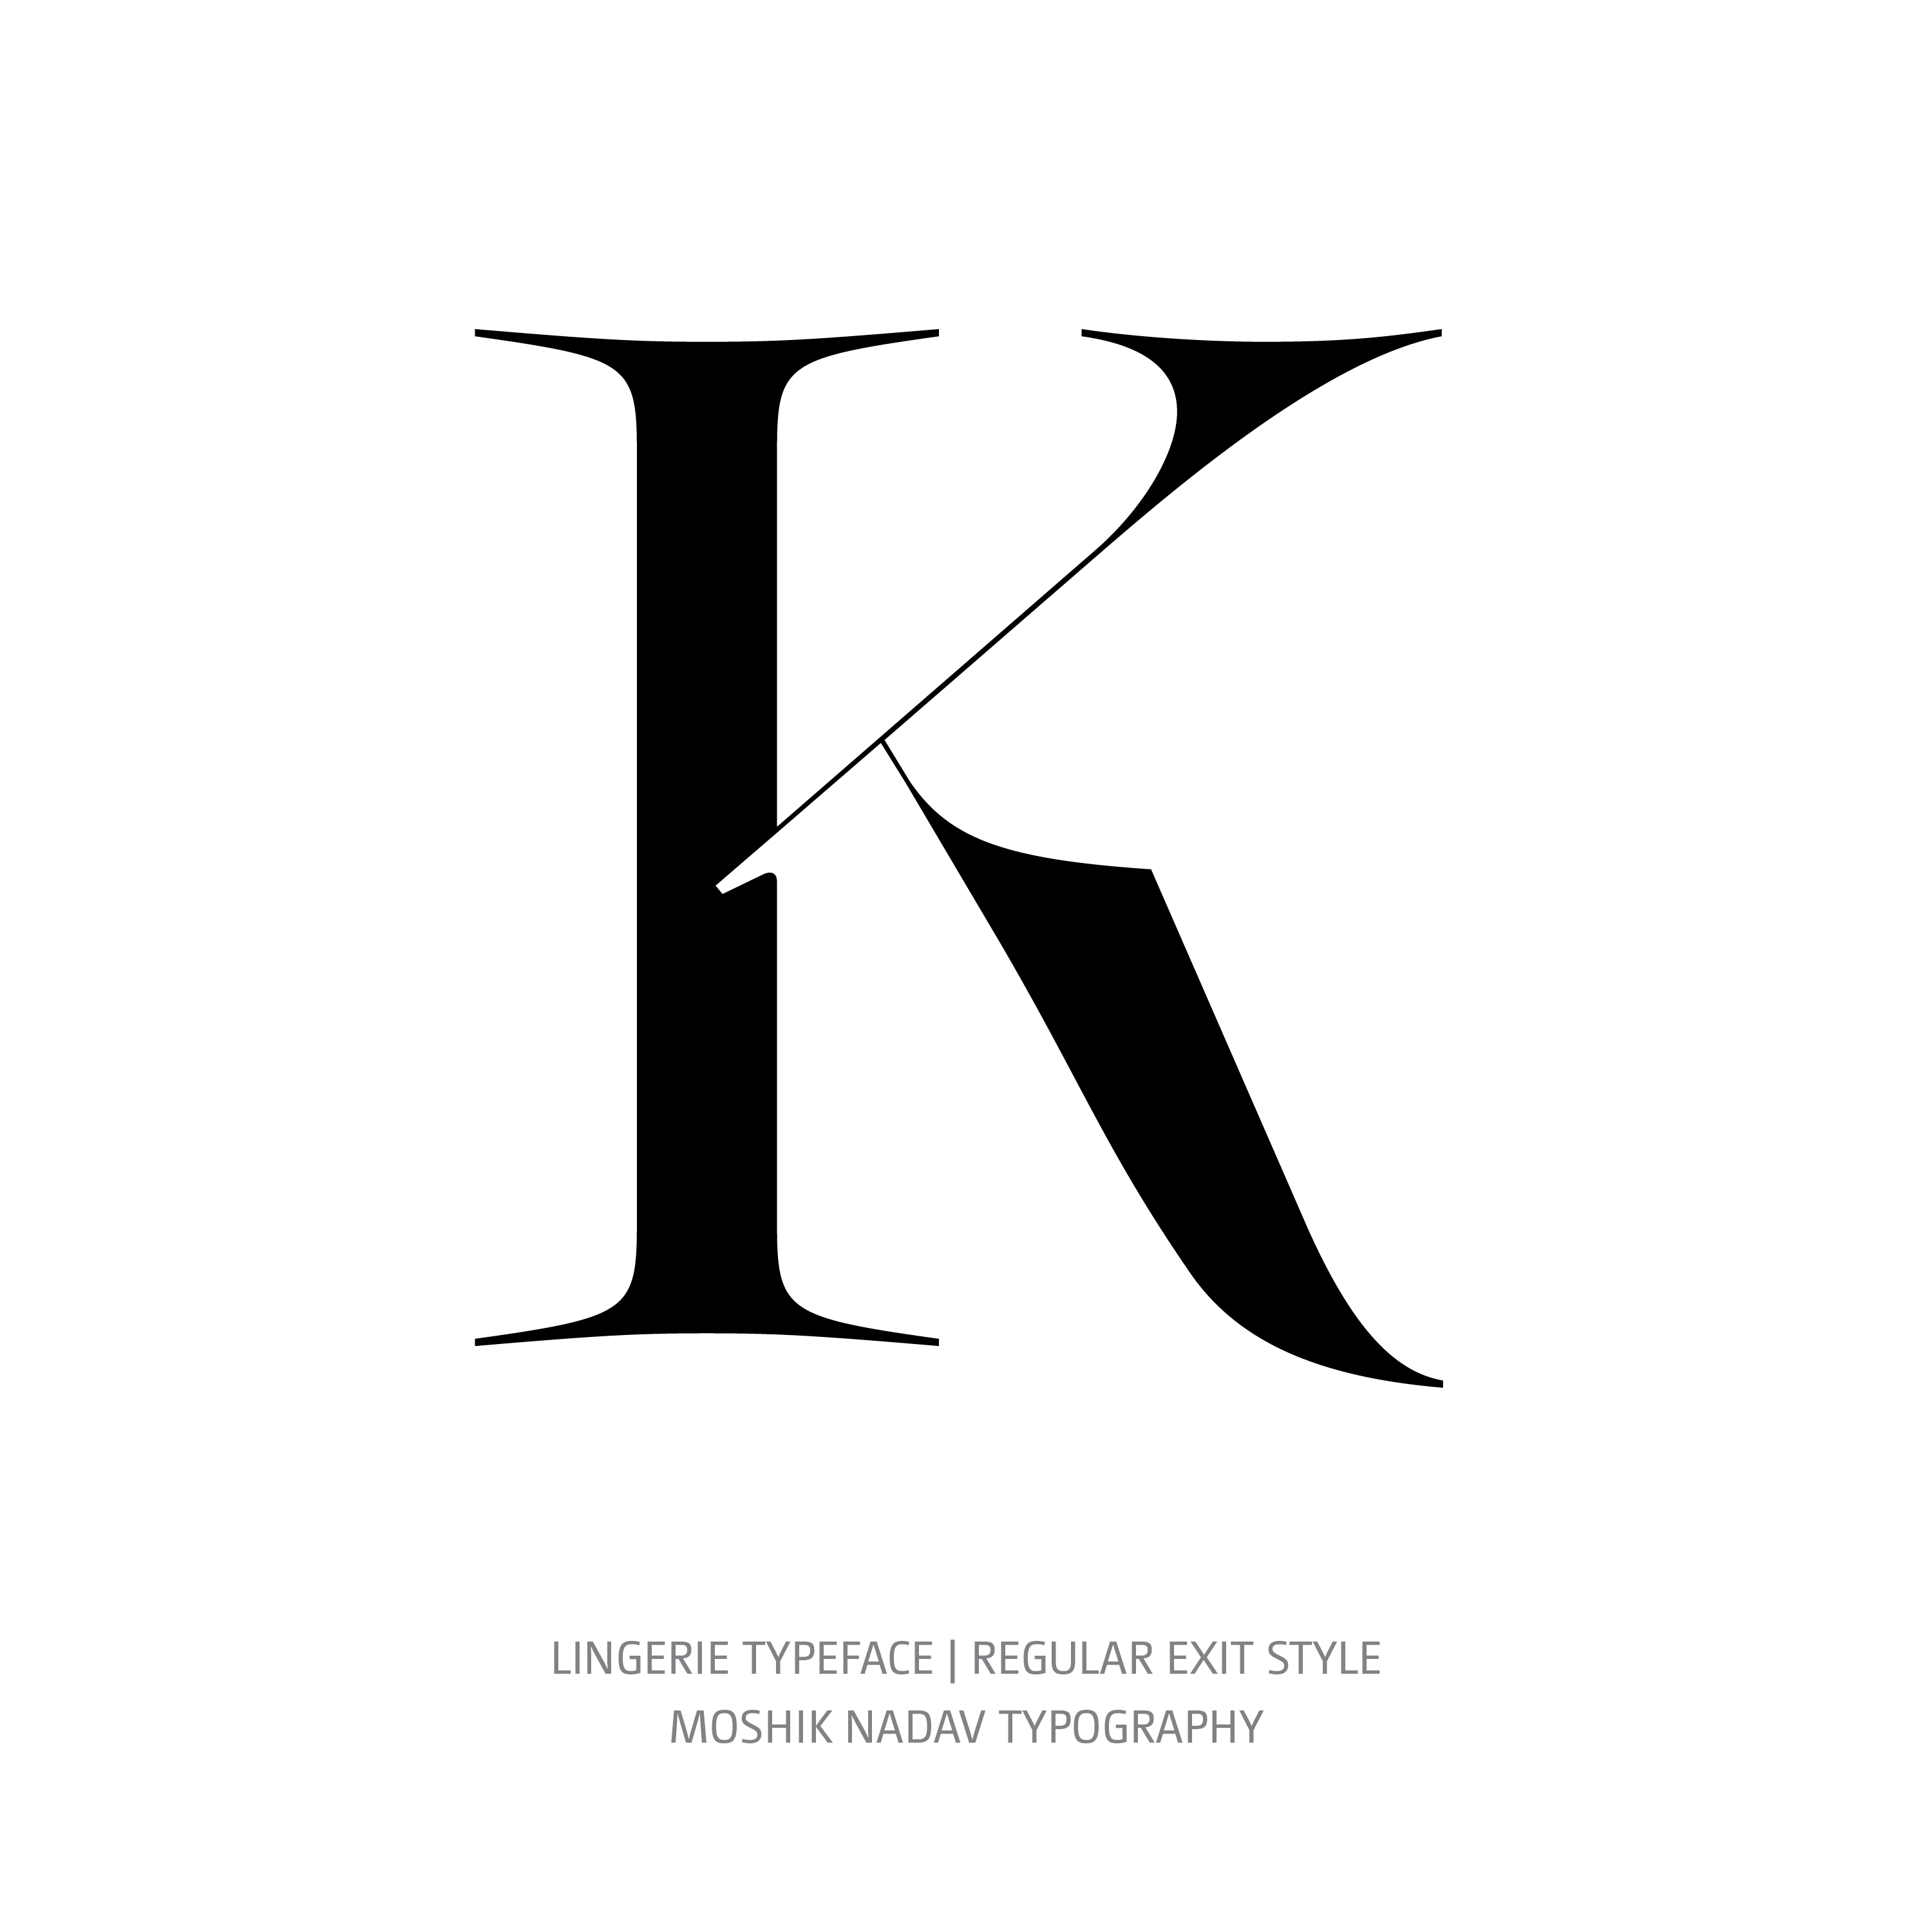 Lingerie Typeface Regular Exit K